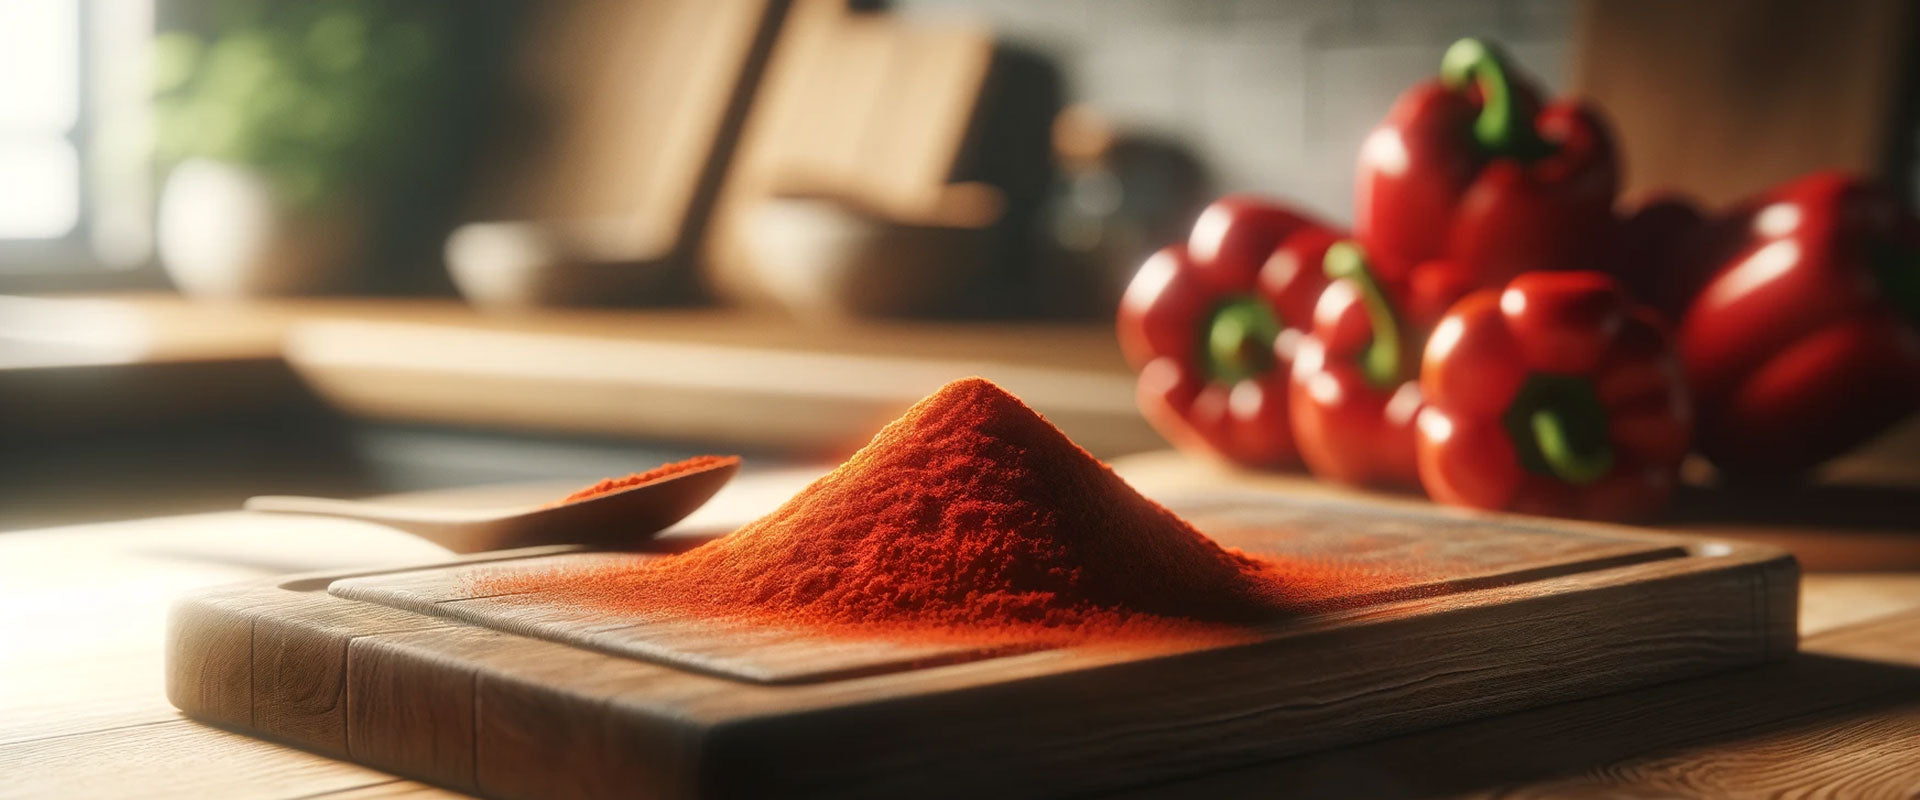 paprika for natural orange food color and dye